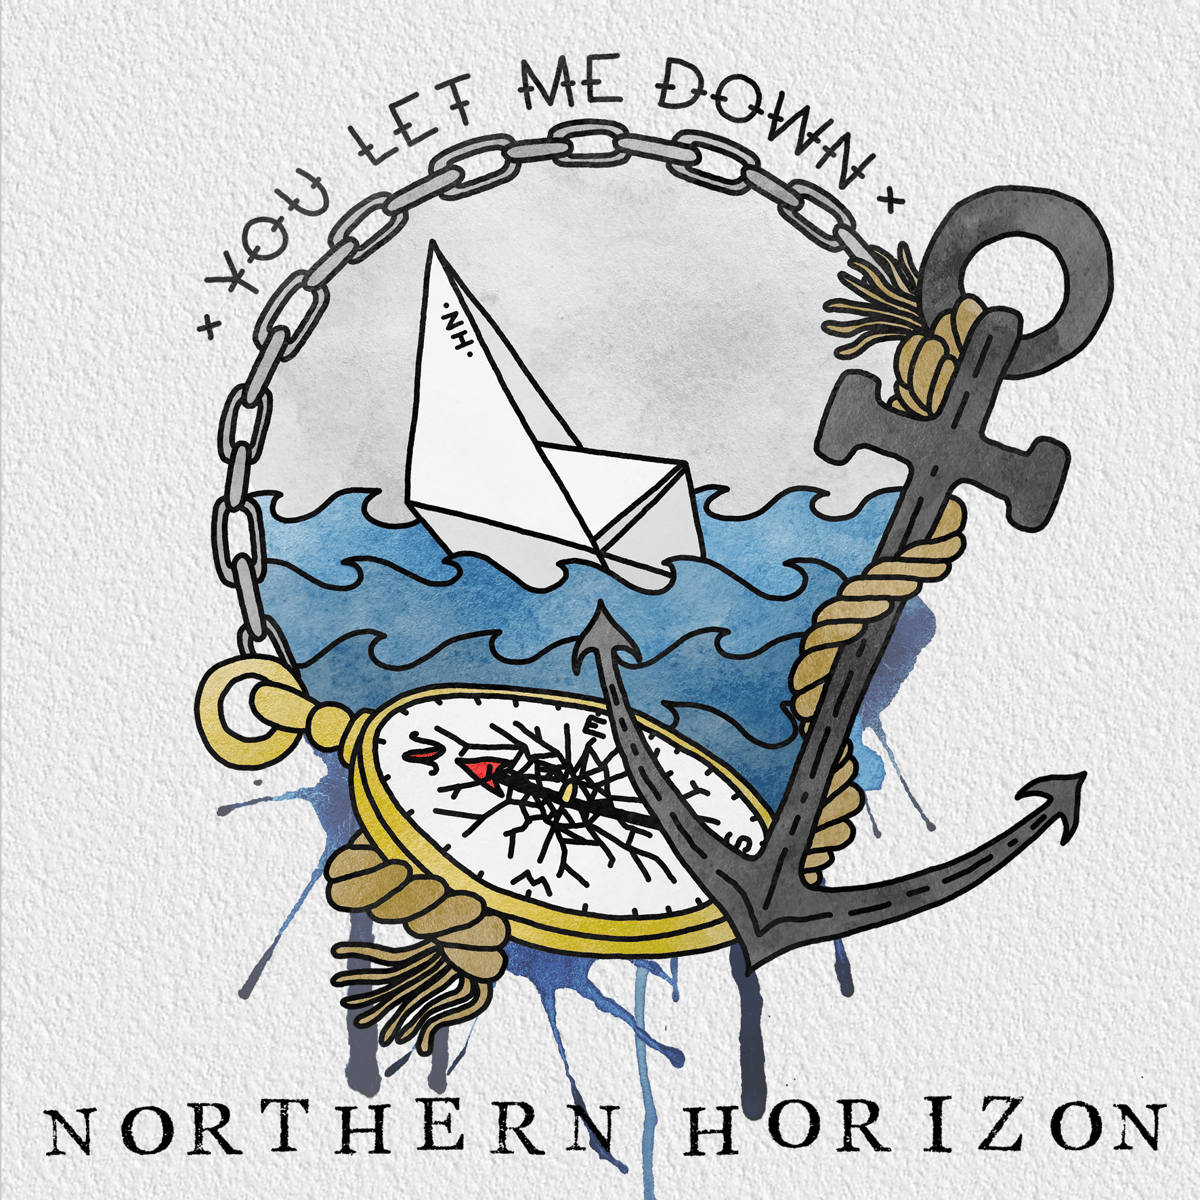 North Horizon. Northern Horizon. Down north